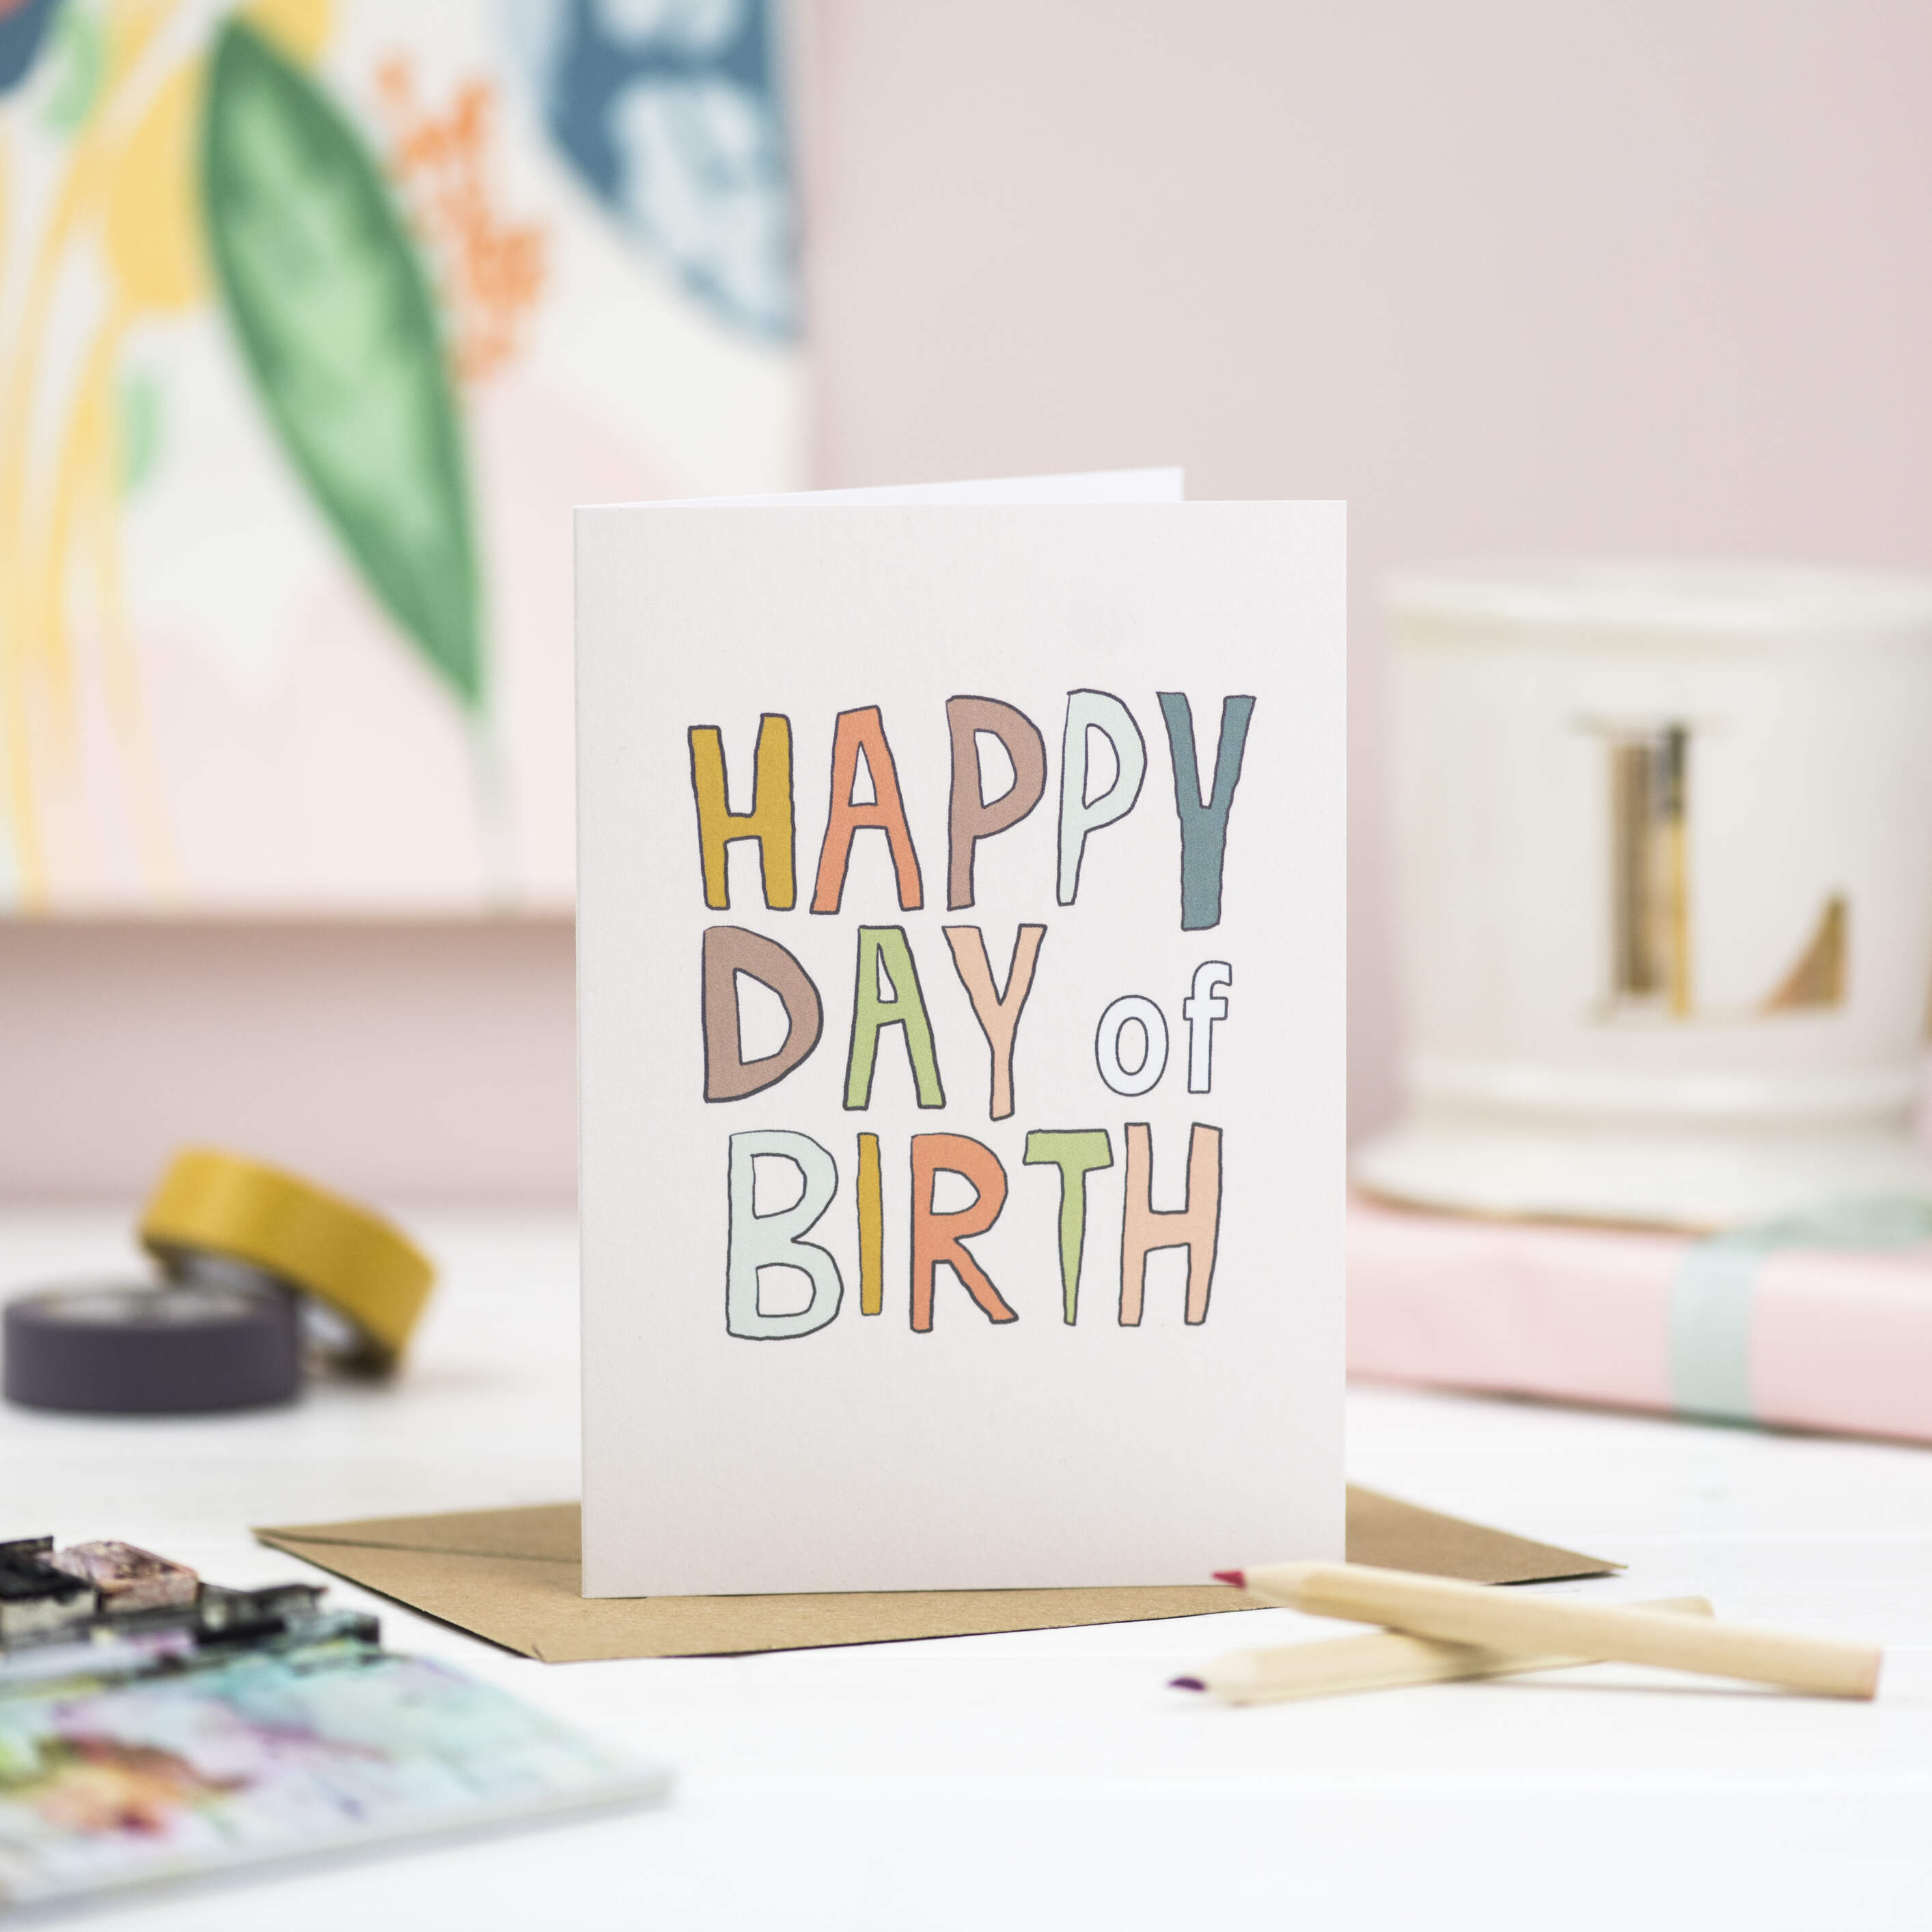 Happy Day of Birth Birthday greetings card